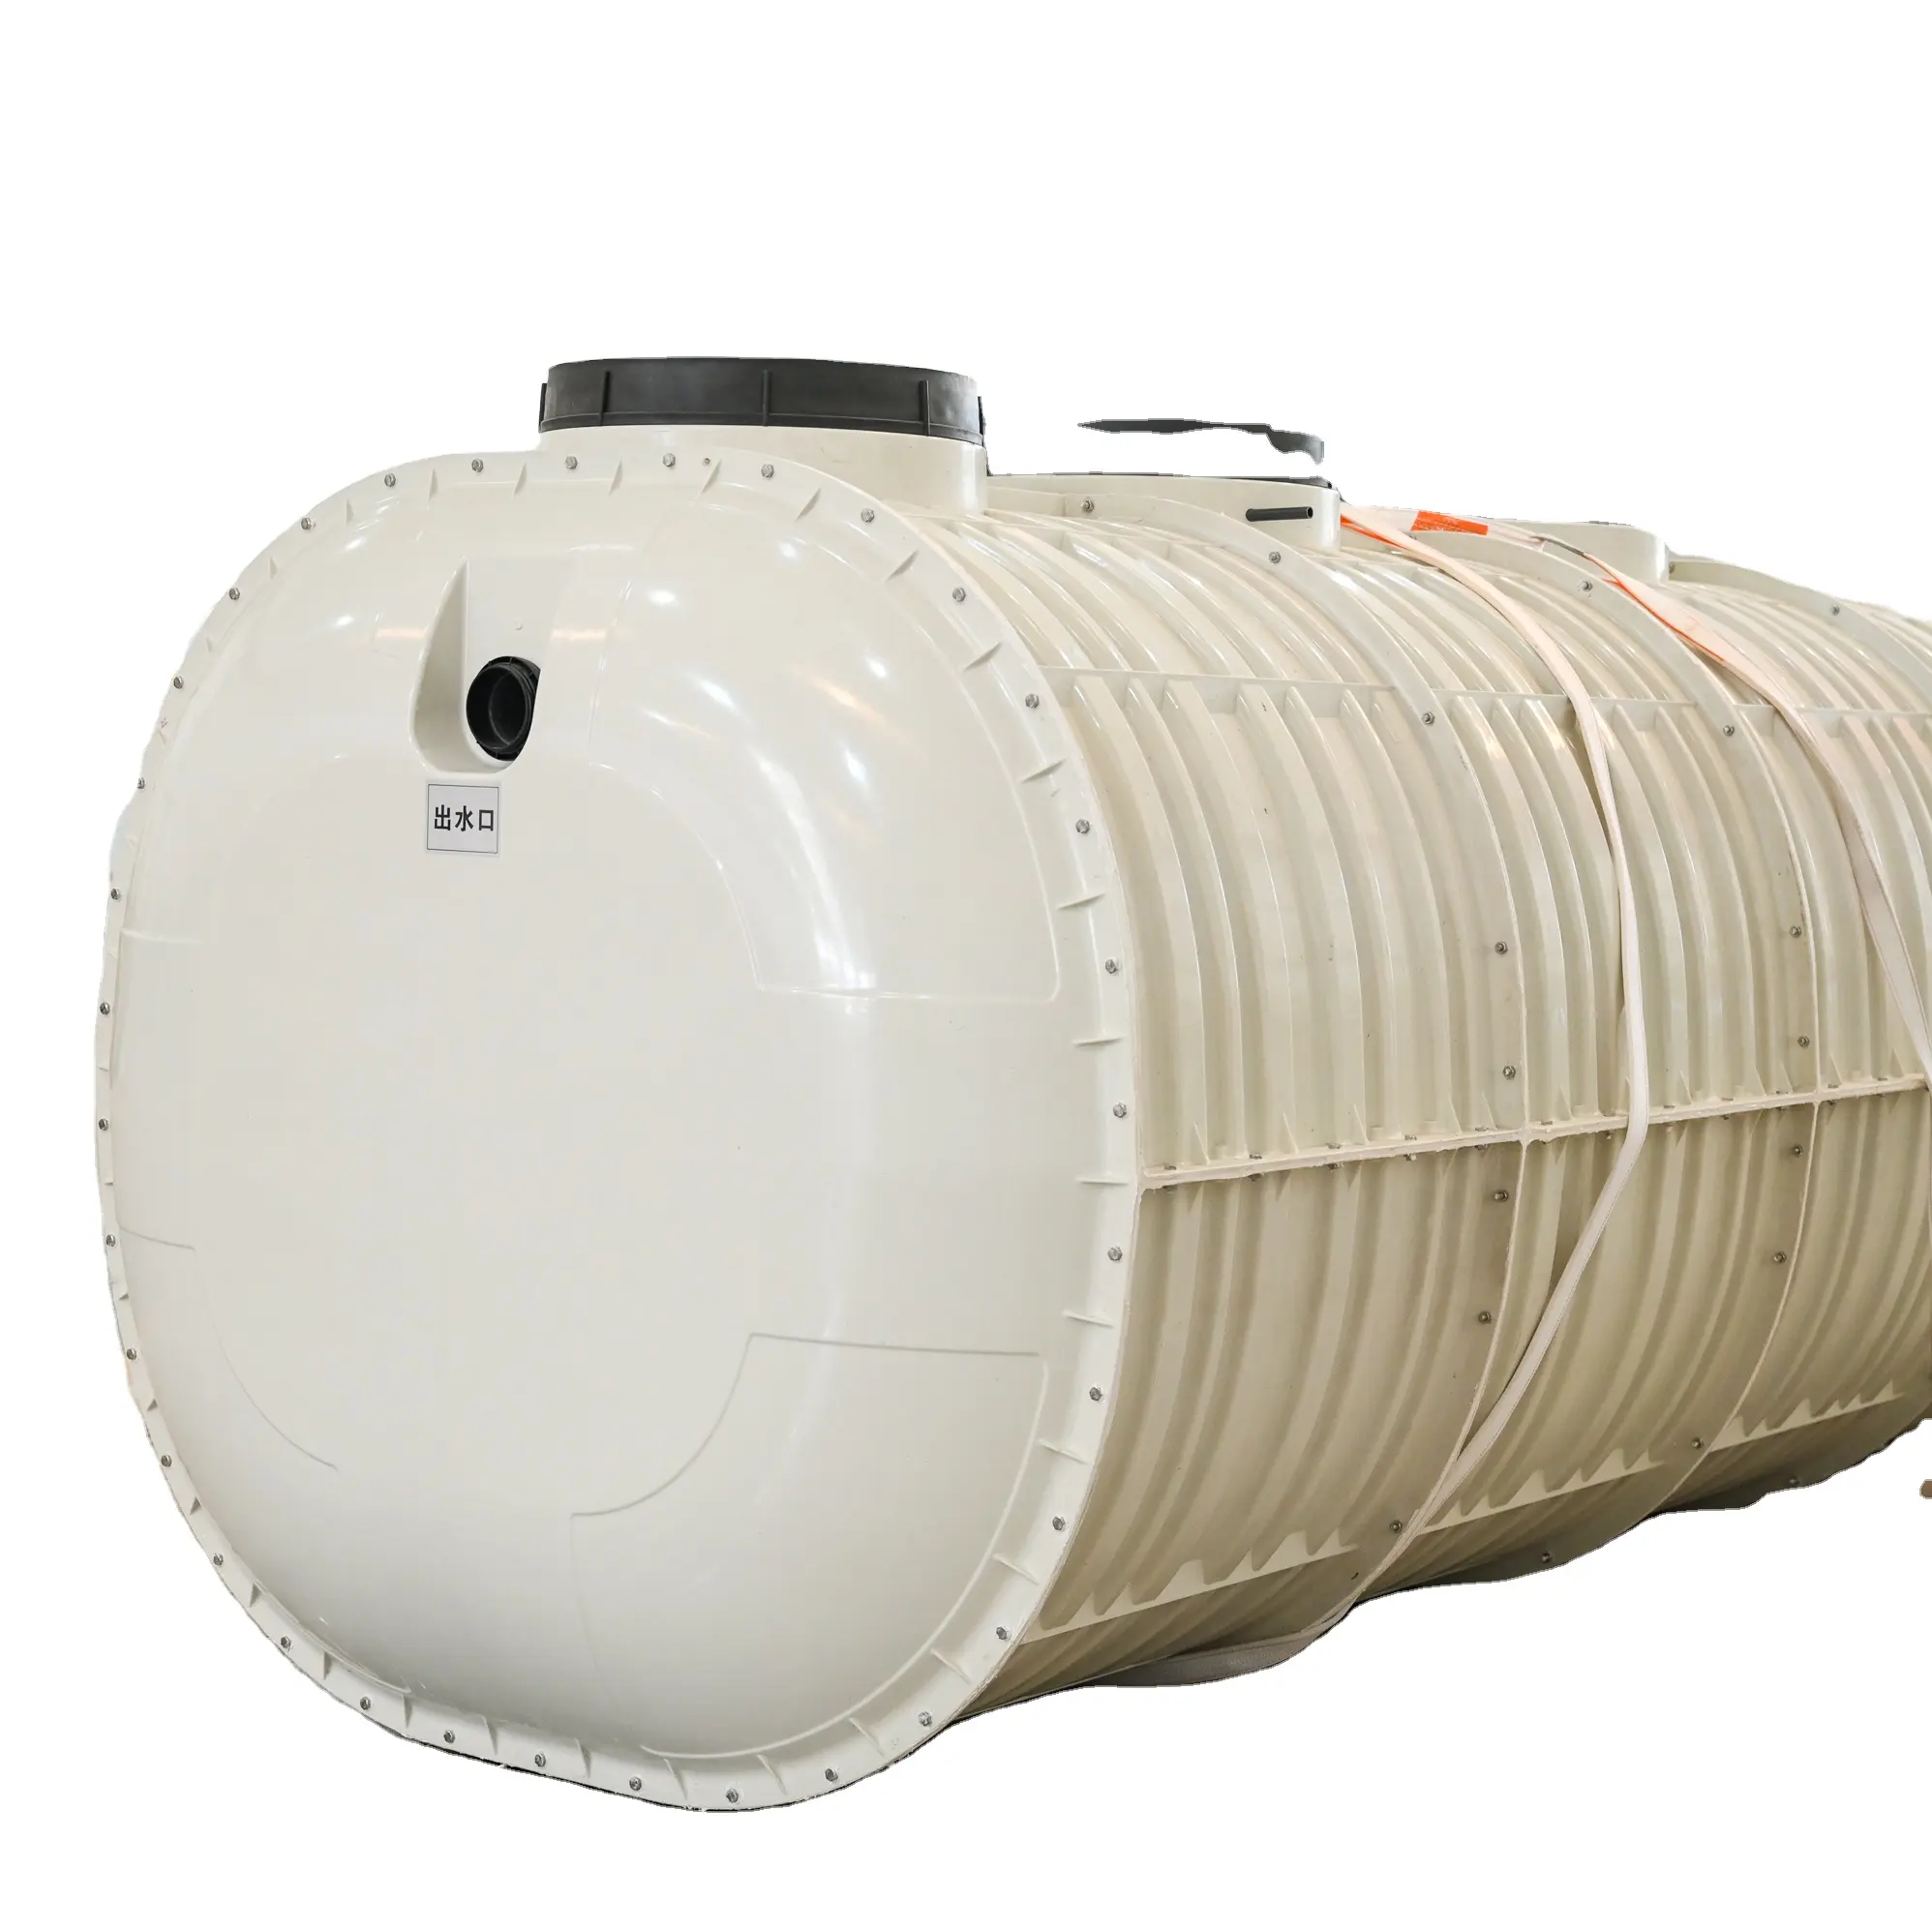 530 Gallonen 1300 Gallonen Abwasser behandlungs tank Neue Biofilm-Füllstoff technologie Abwasser behandlungs tank Haushalts-Abwasser tank